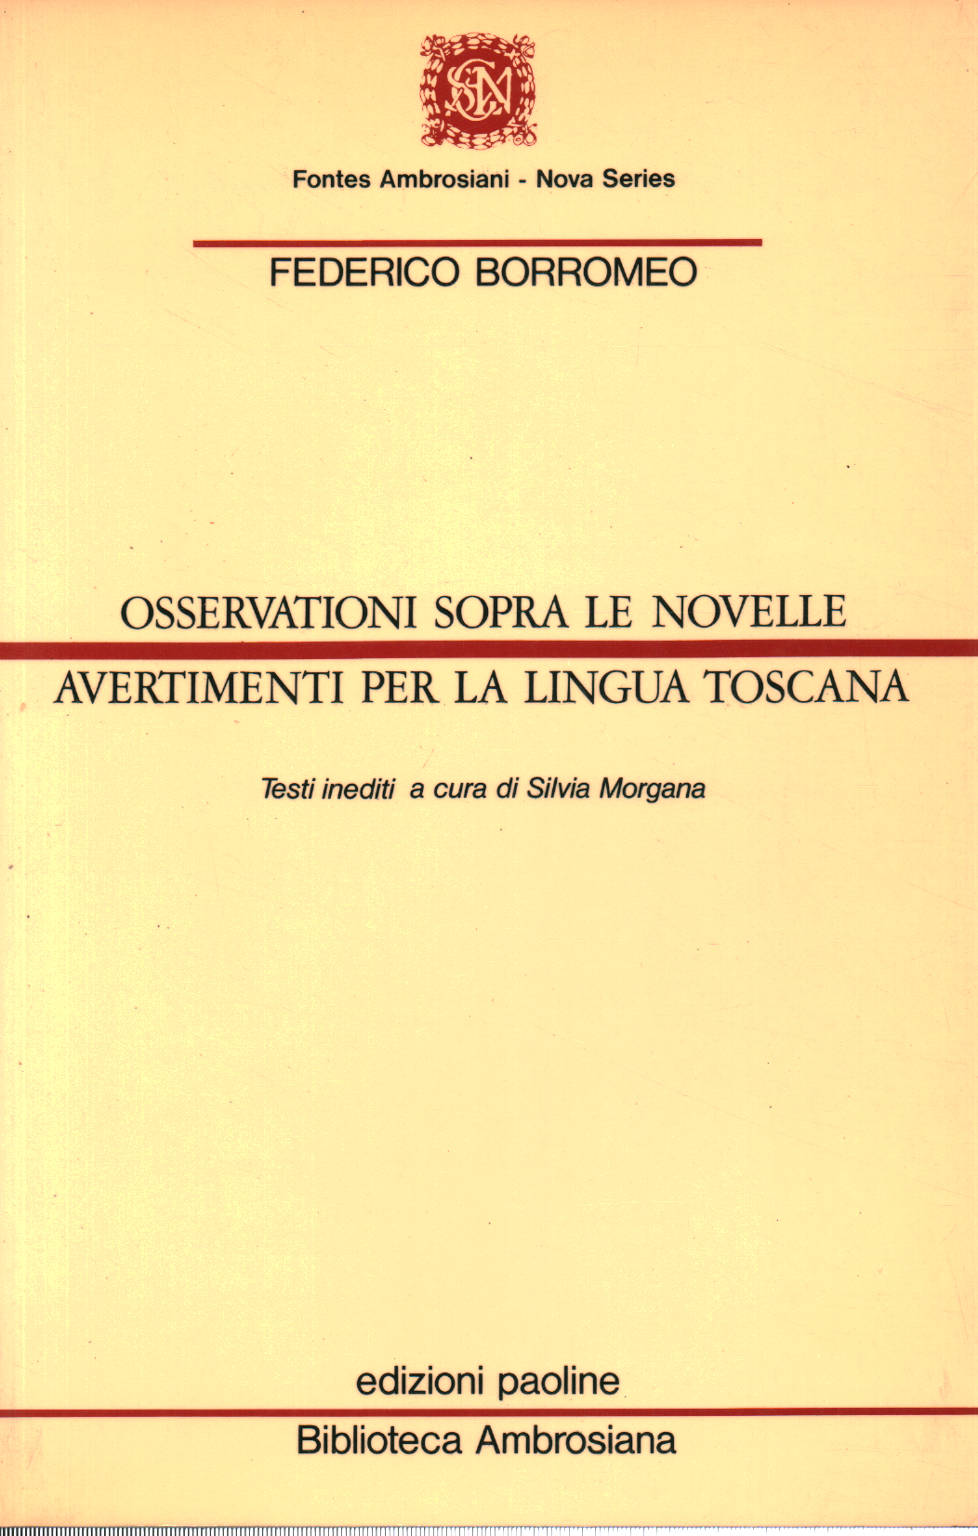 Observations on the tales, Federico Borromeo